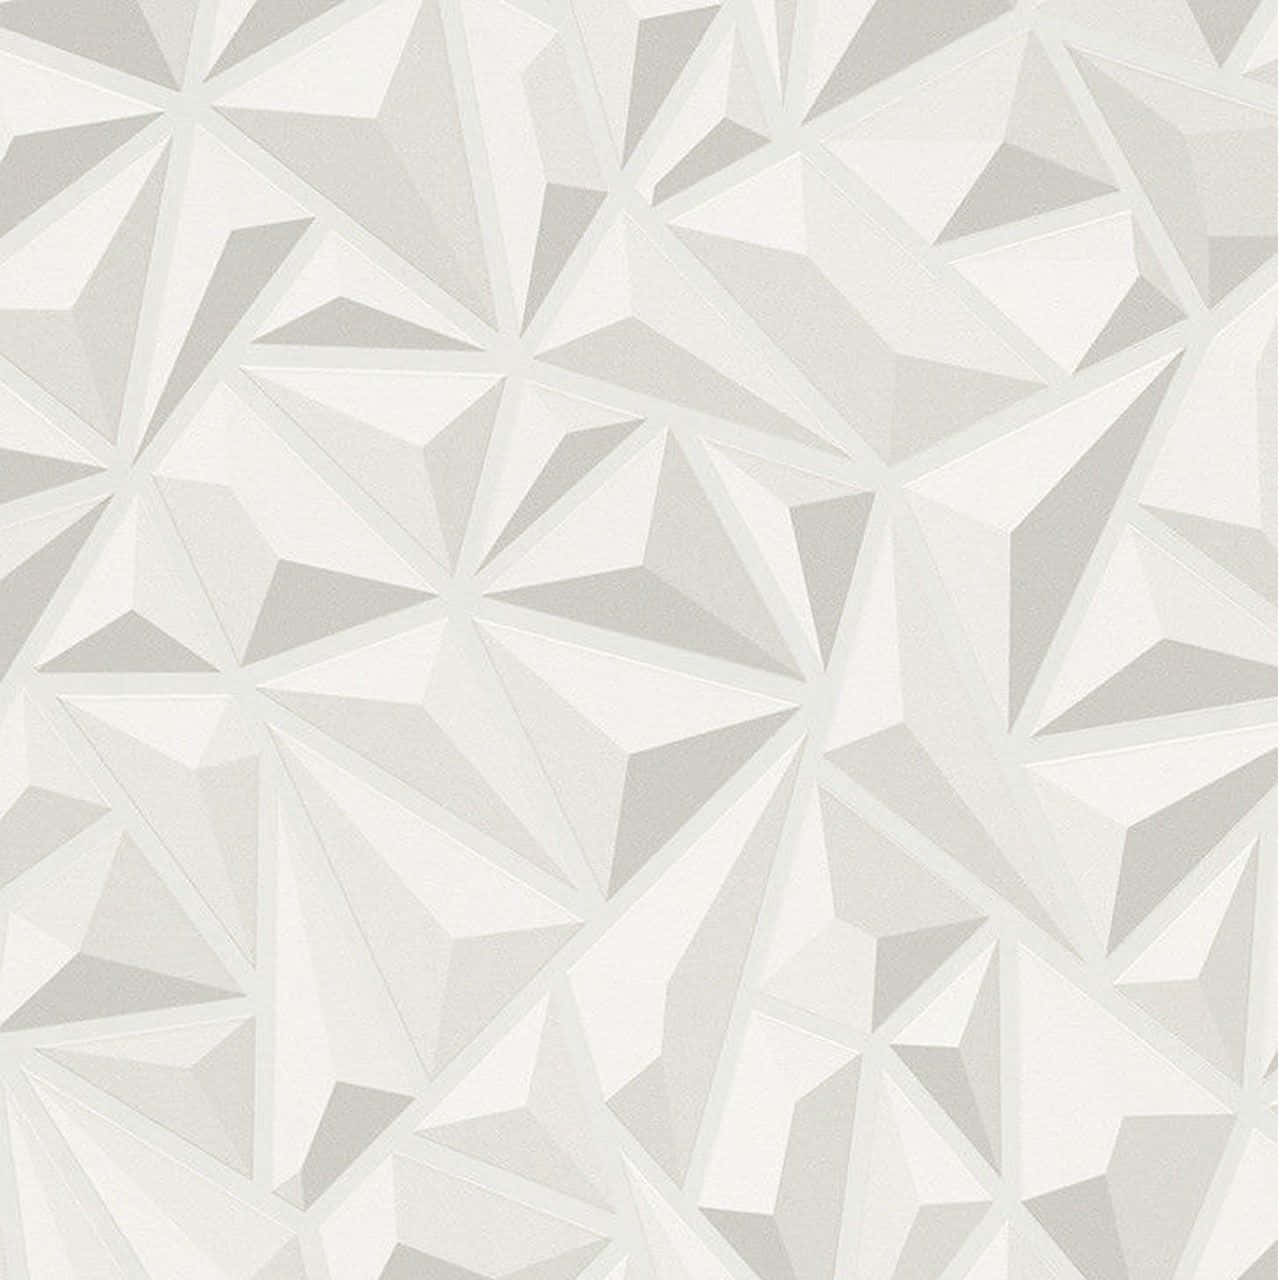 Immaginidi Texture In Tessuto Bianco In 3d.